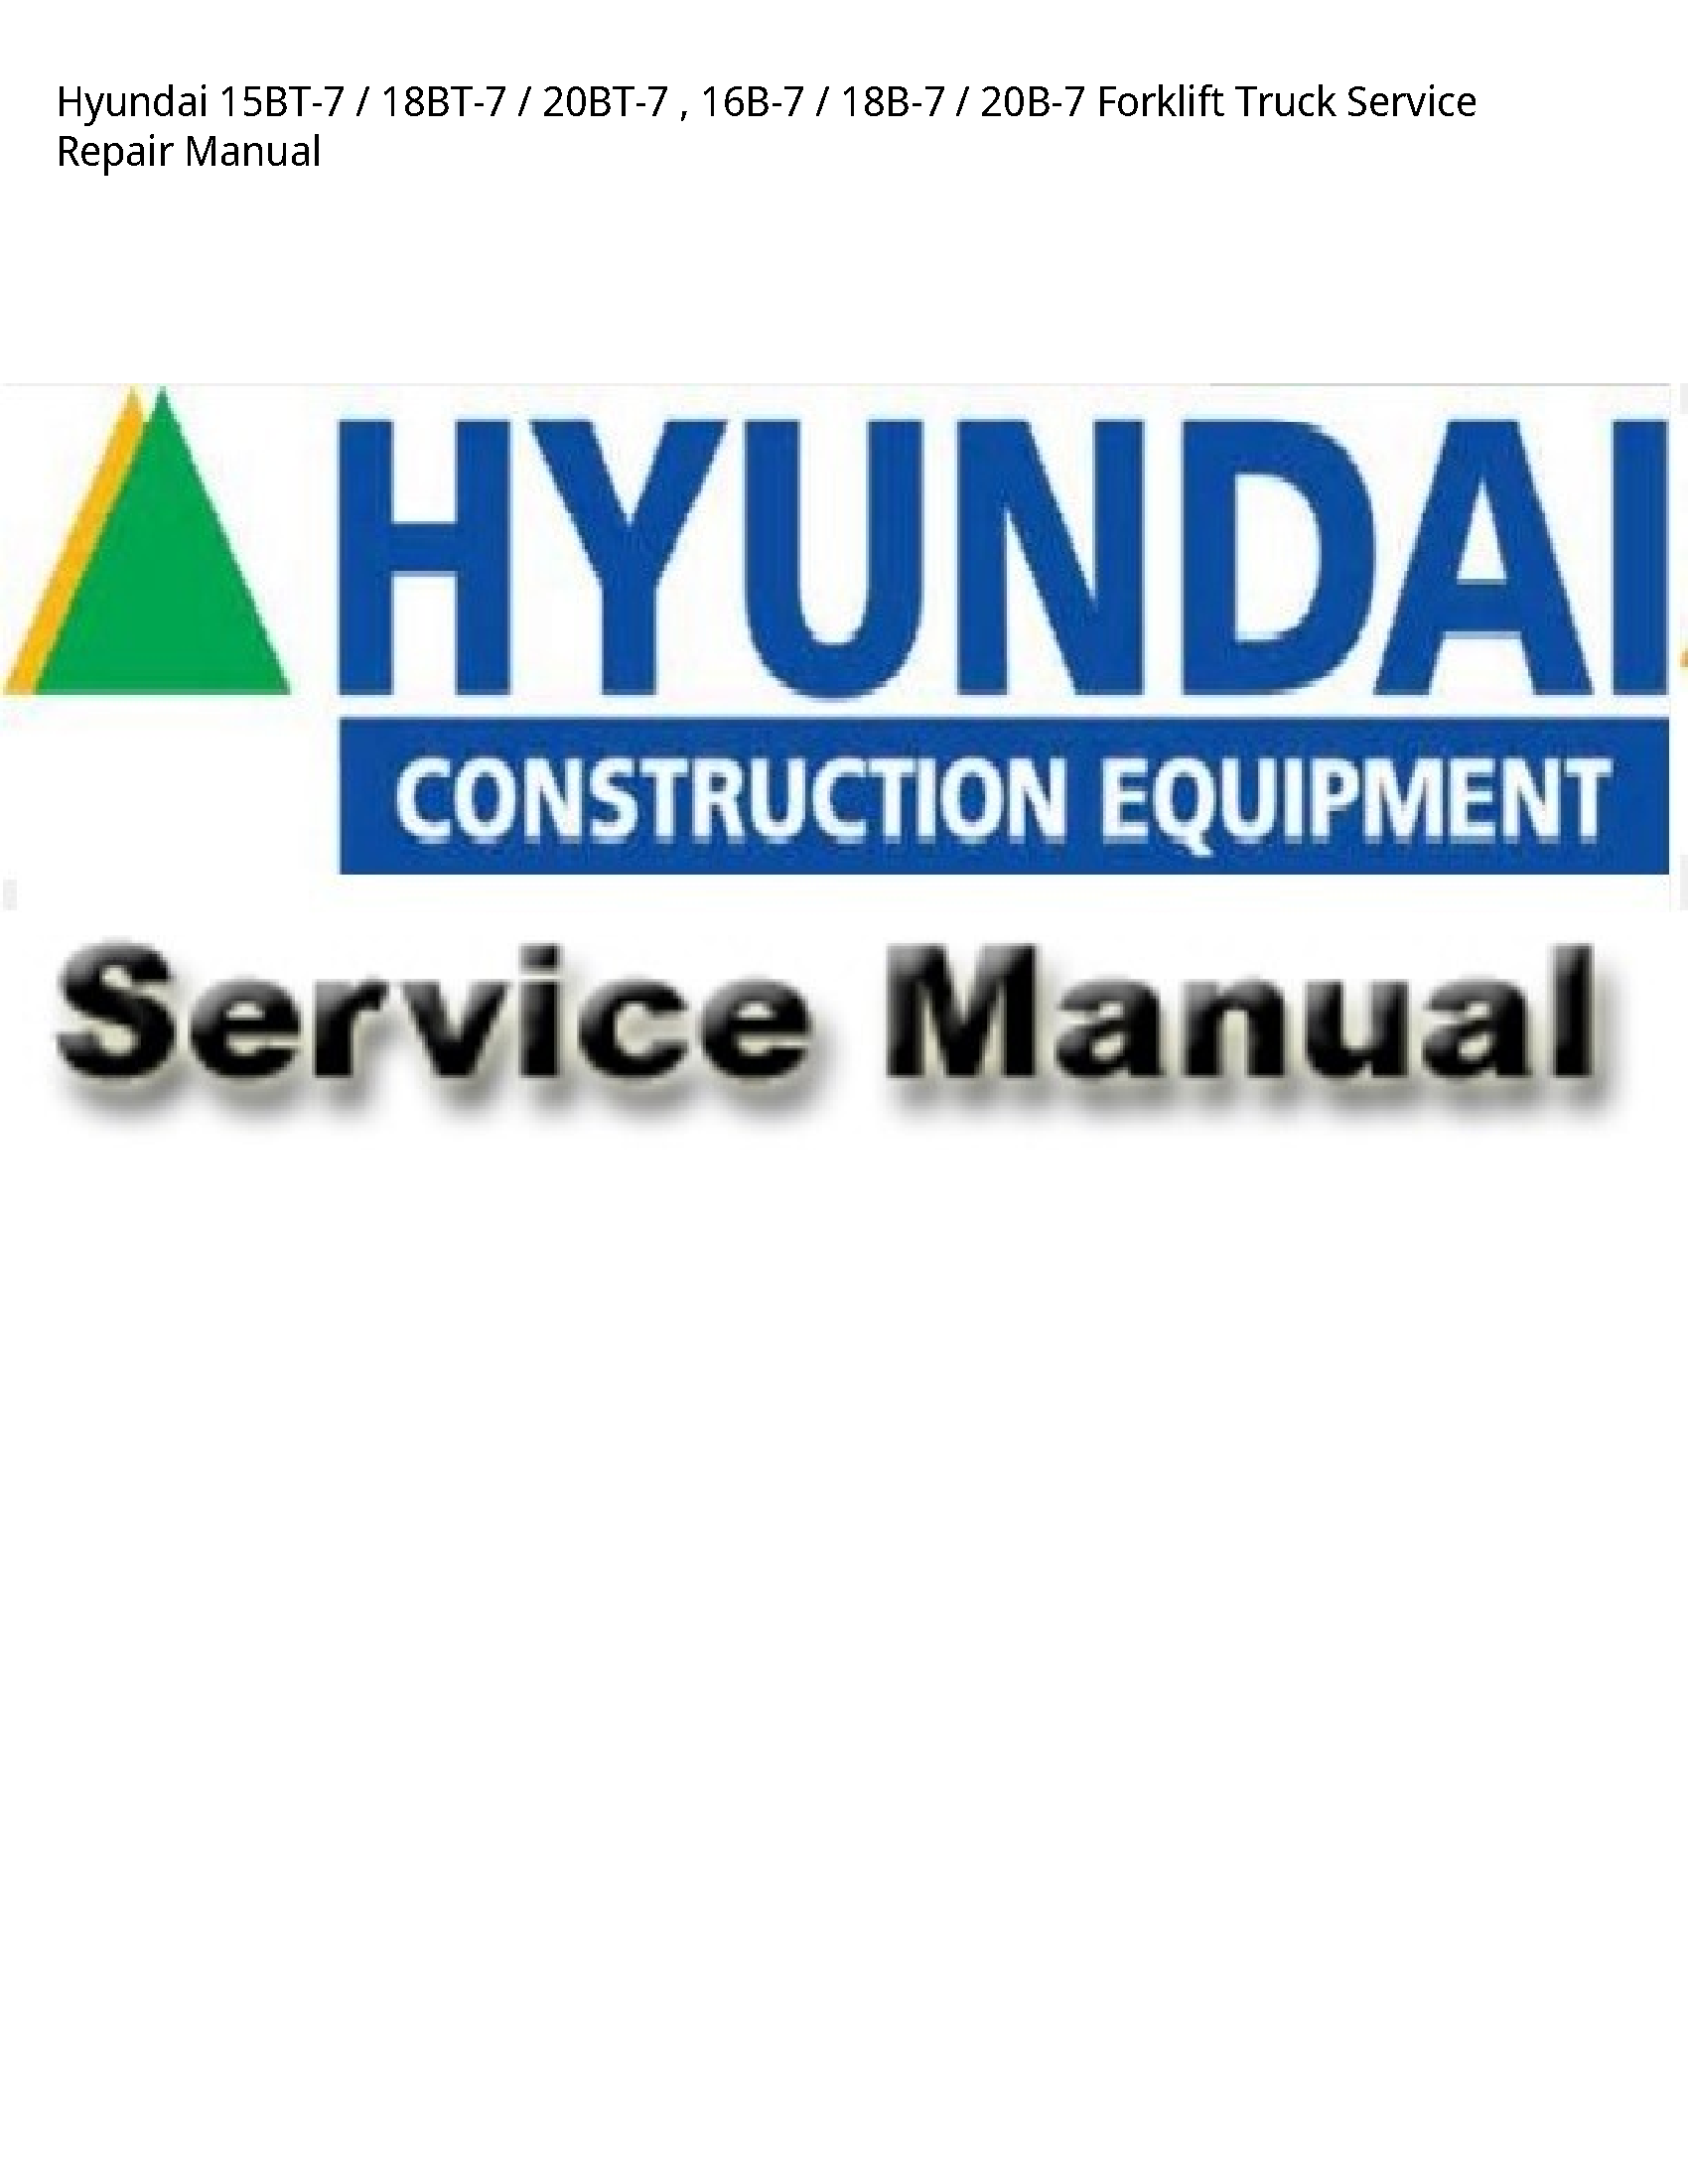 Hyundai 15BT-7 Forklift Truck manual